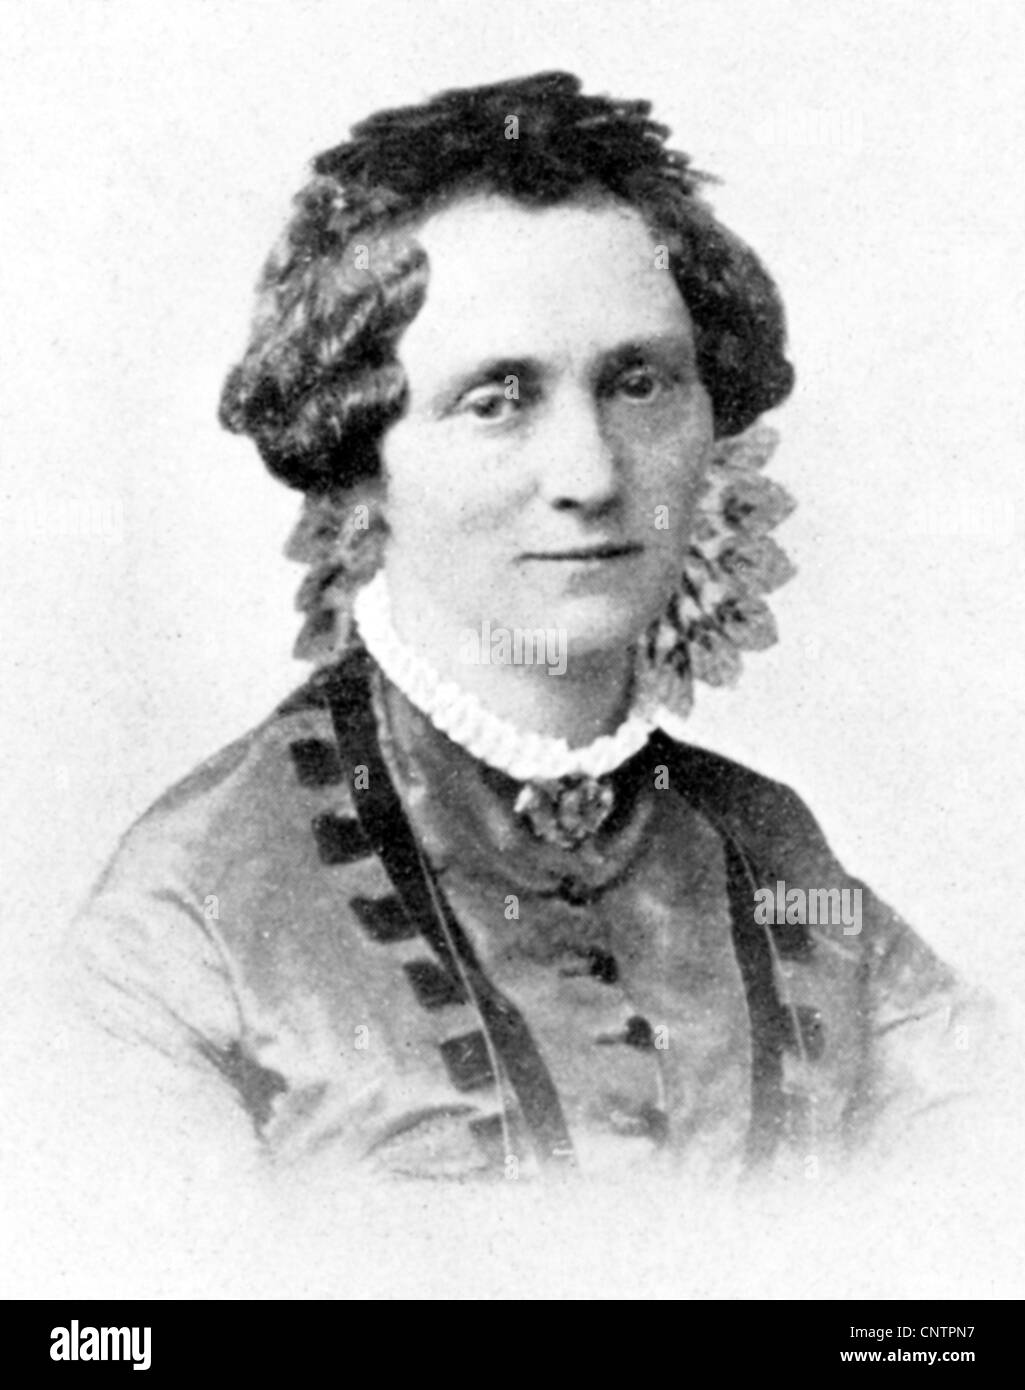 Fontane, Theodor  30.12.1819 - 20.9.1898, German author / writer, his wife Emilie, portrait, aged circa 50 years, photo, Stock Photo